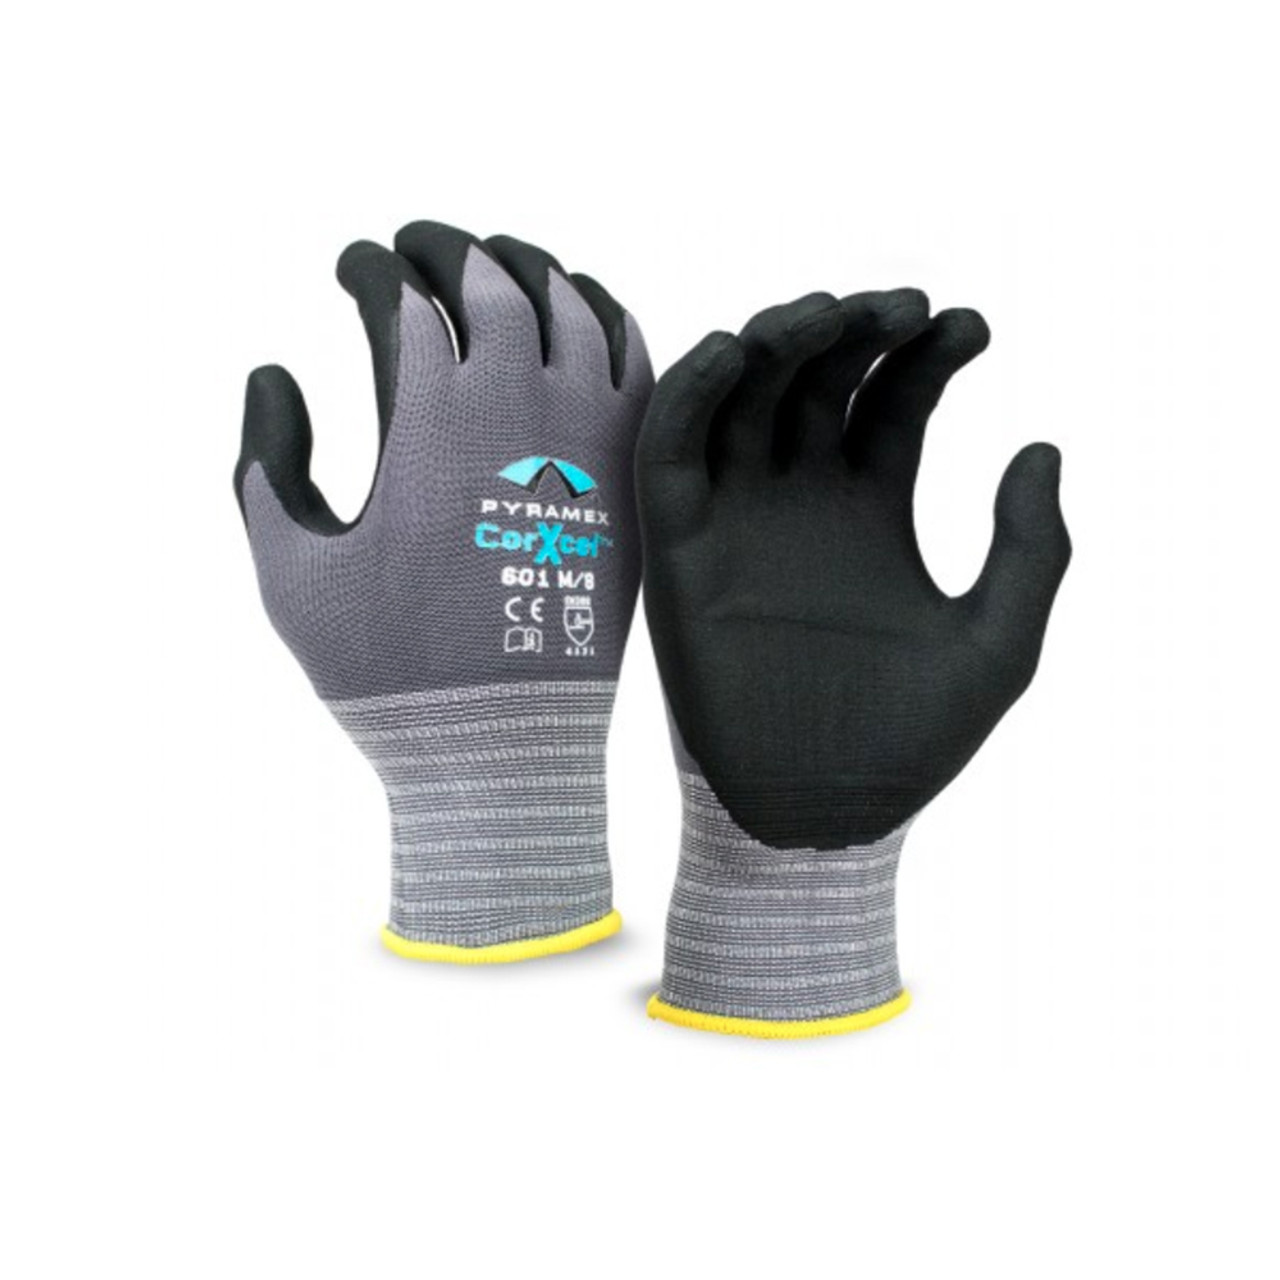 Pyramex, CorXcel GL601 Series, Micro-Foam Nitrile Gloves, Size Medium, Pack of 12